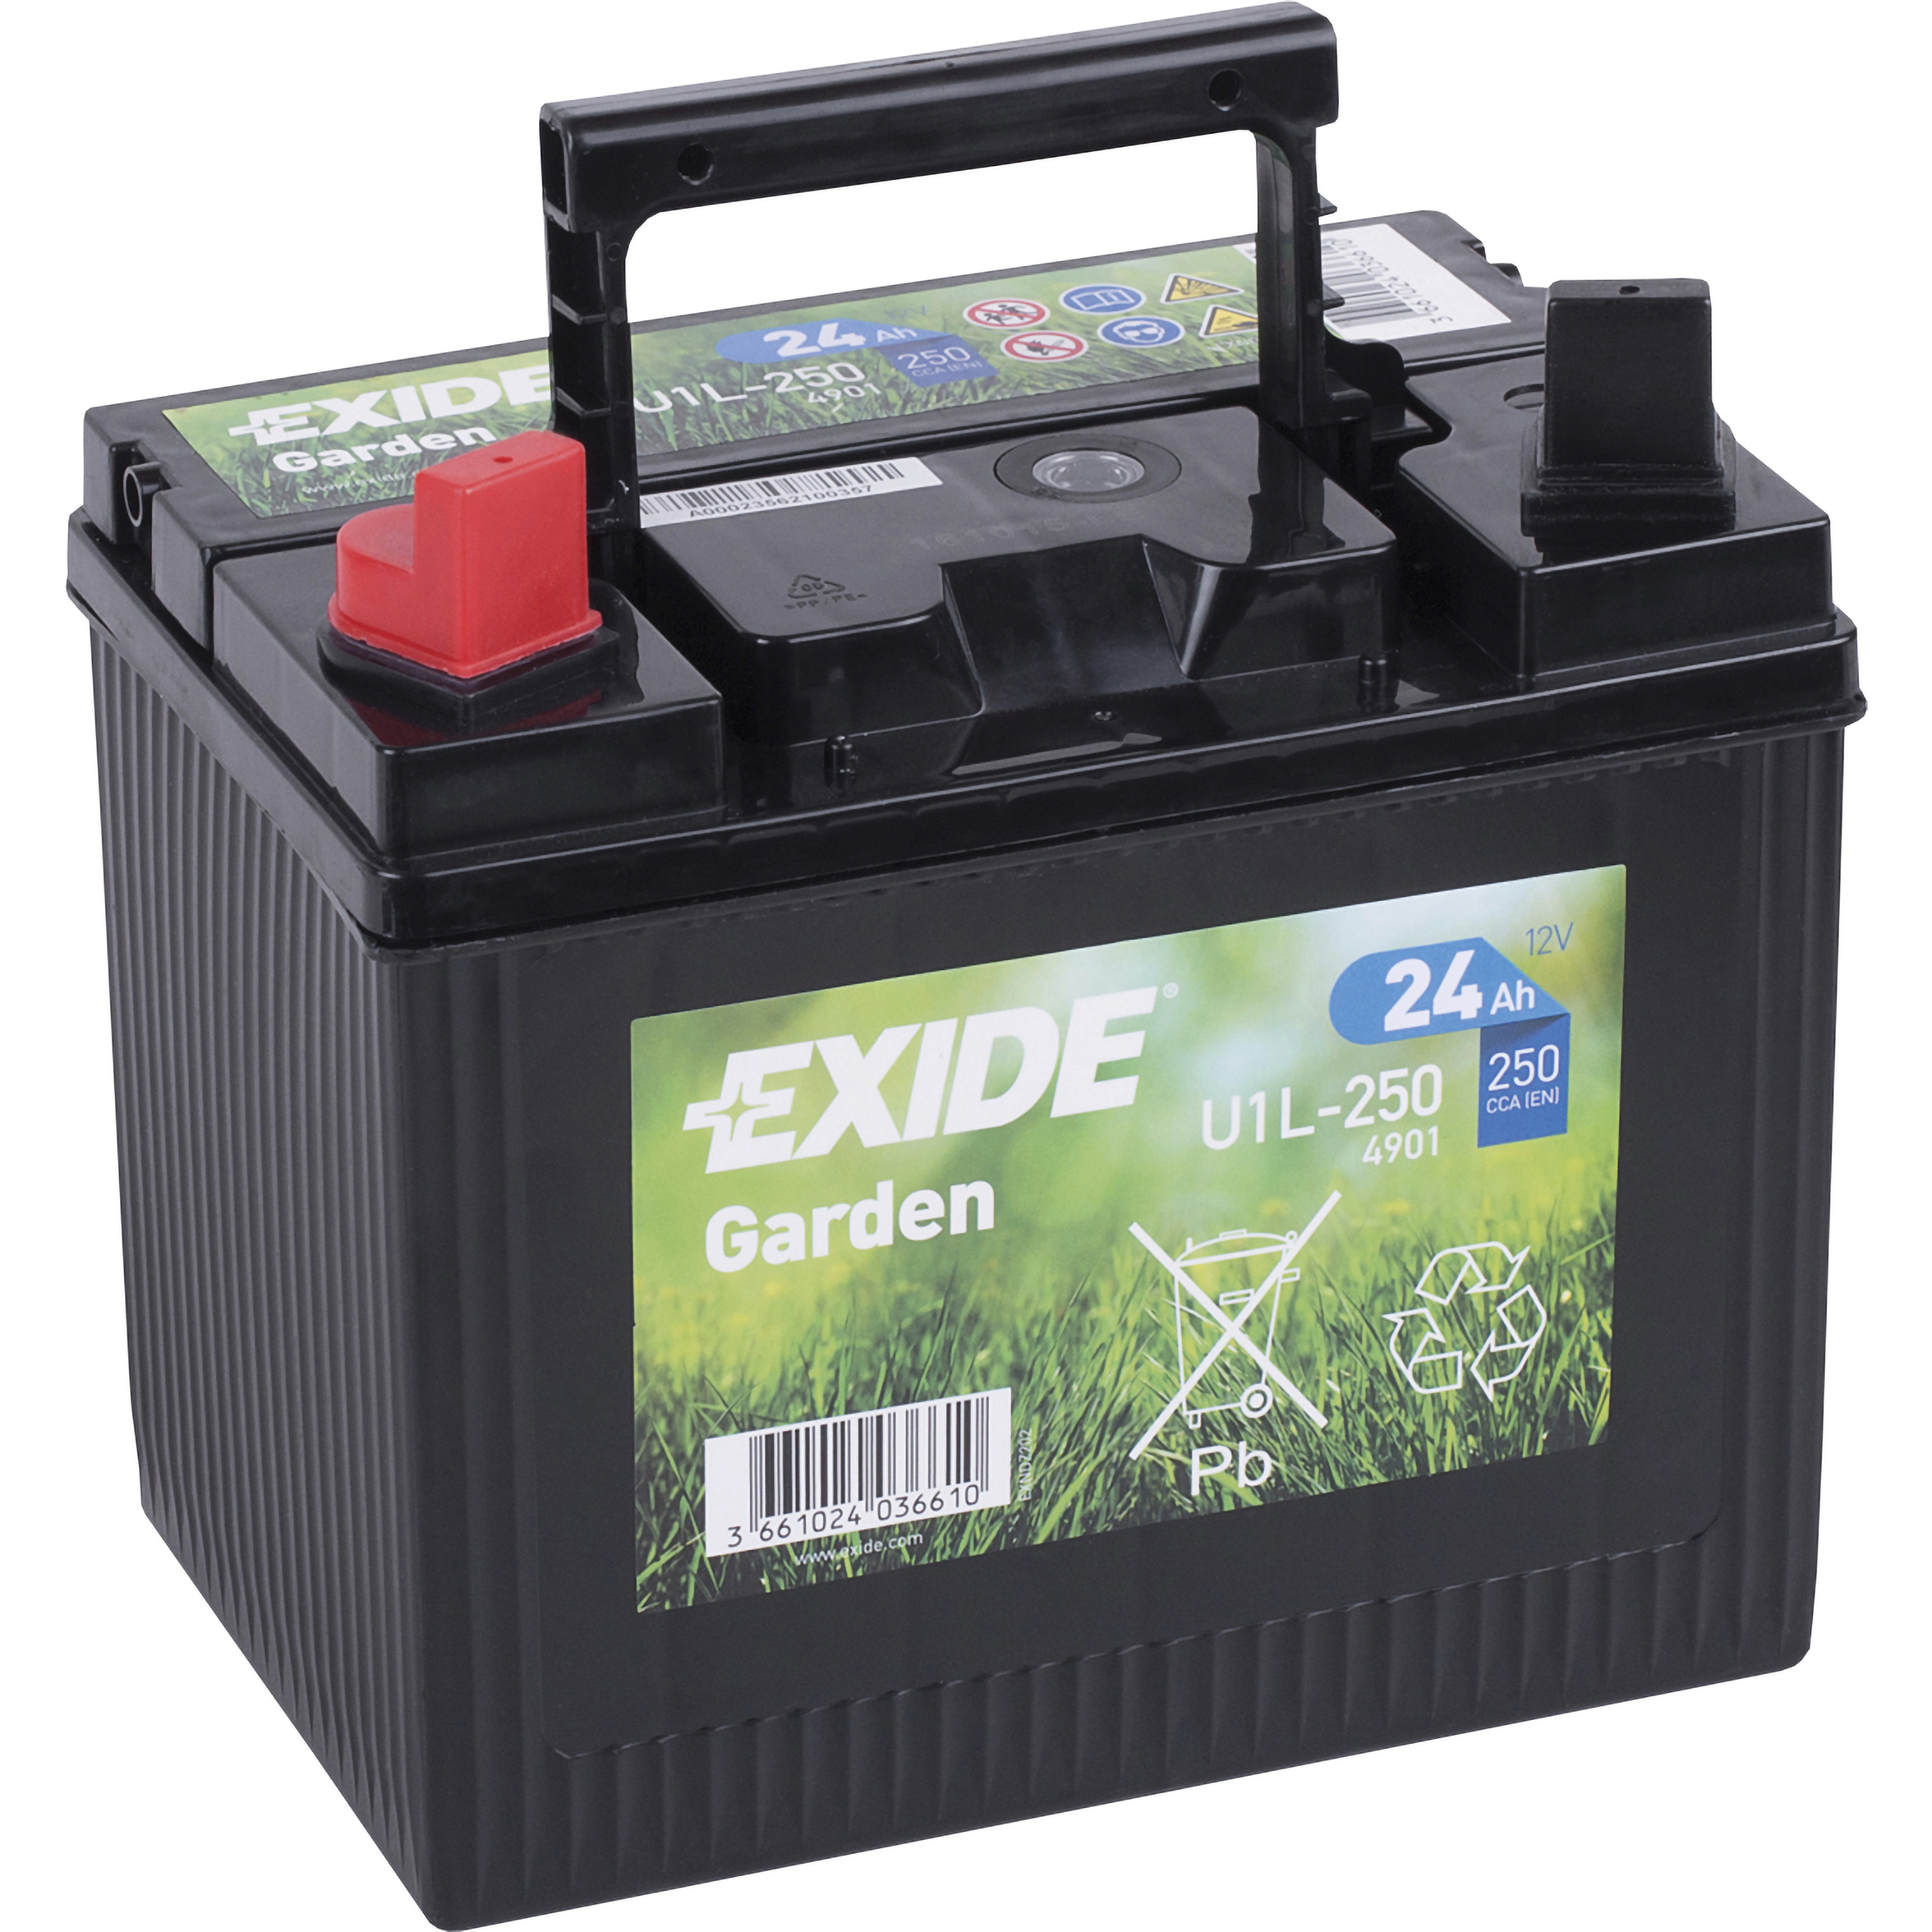 Batteri Tudor U1L-250 Exide Garden